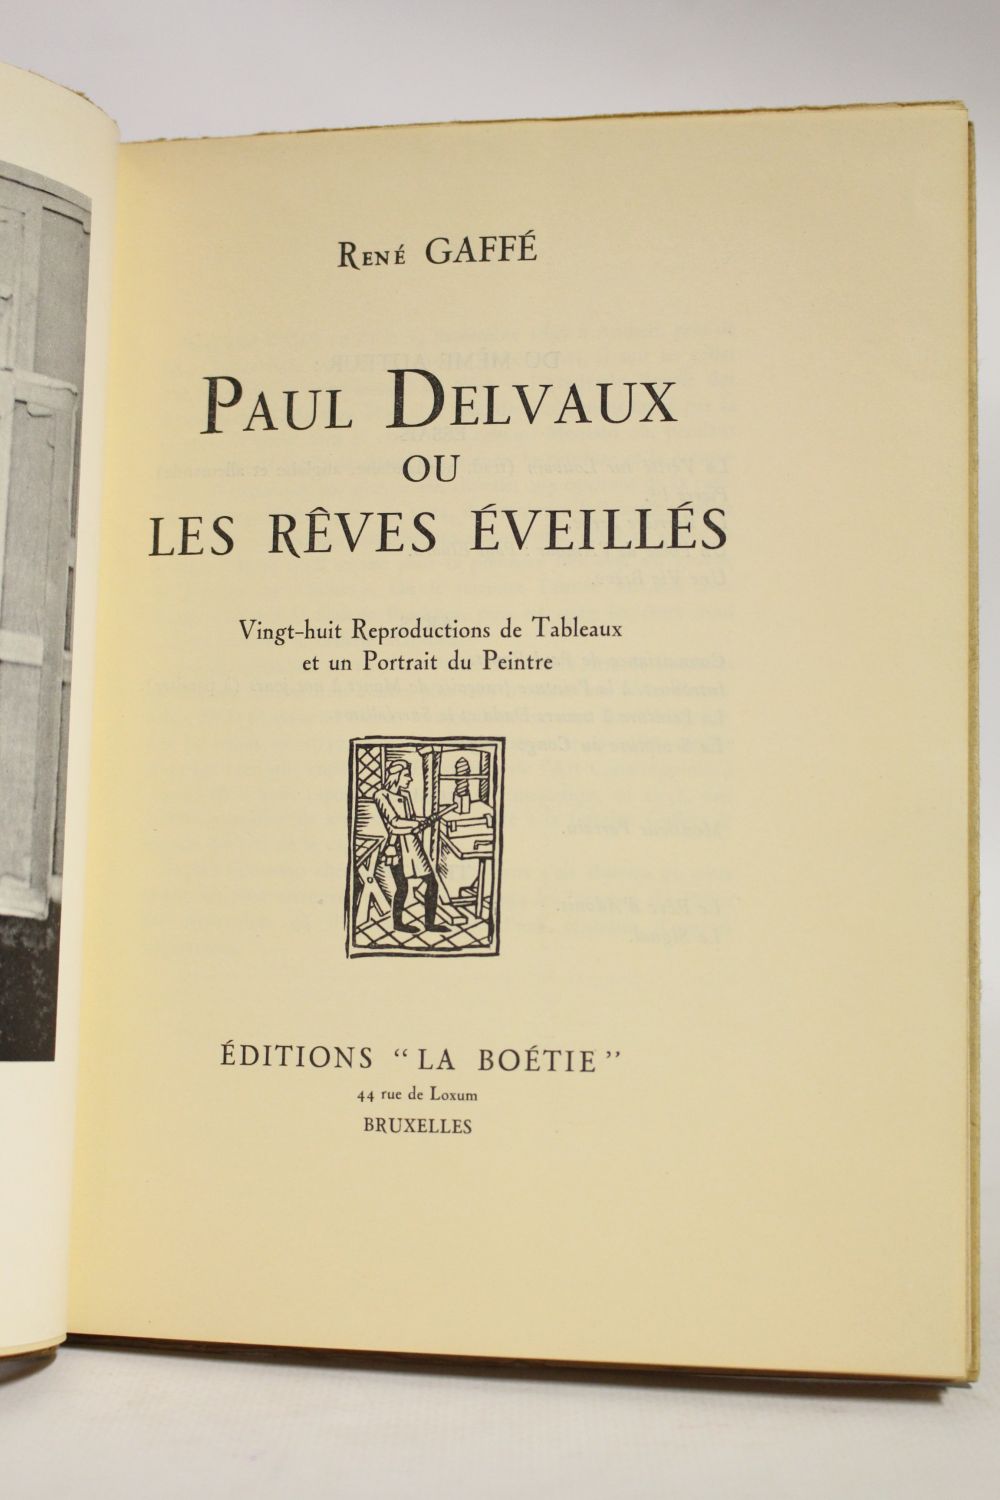 Librairie Delvaux - Home